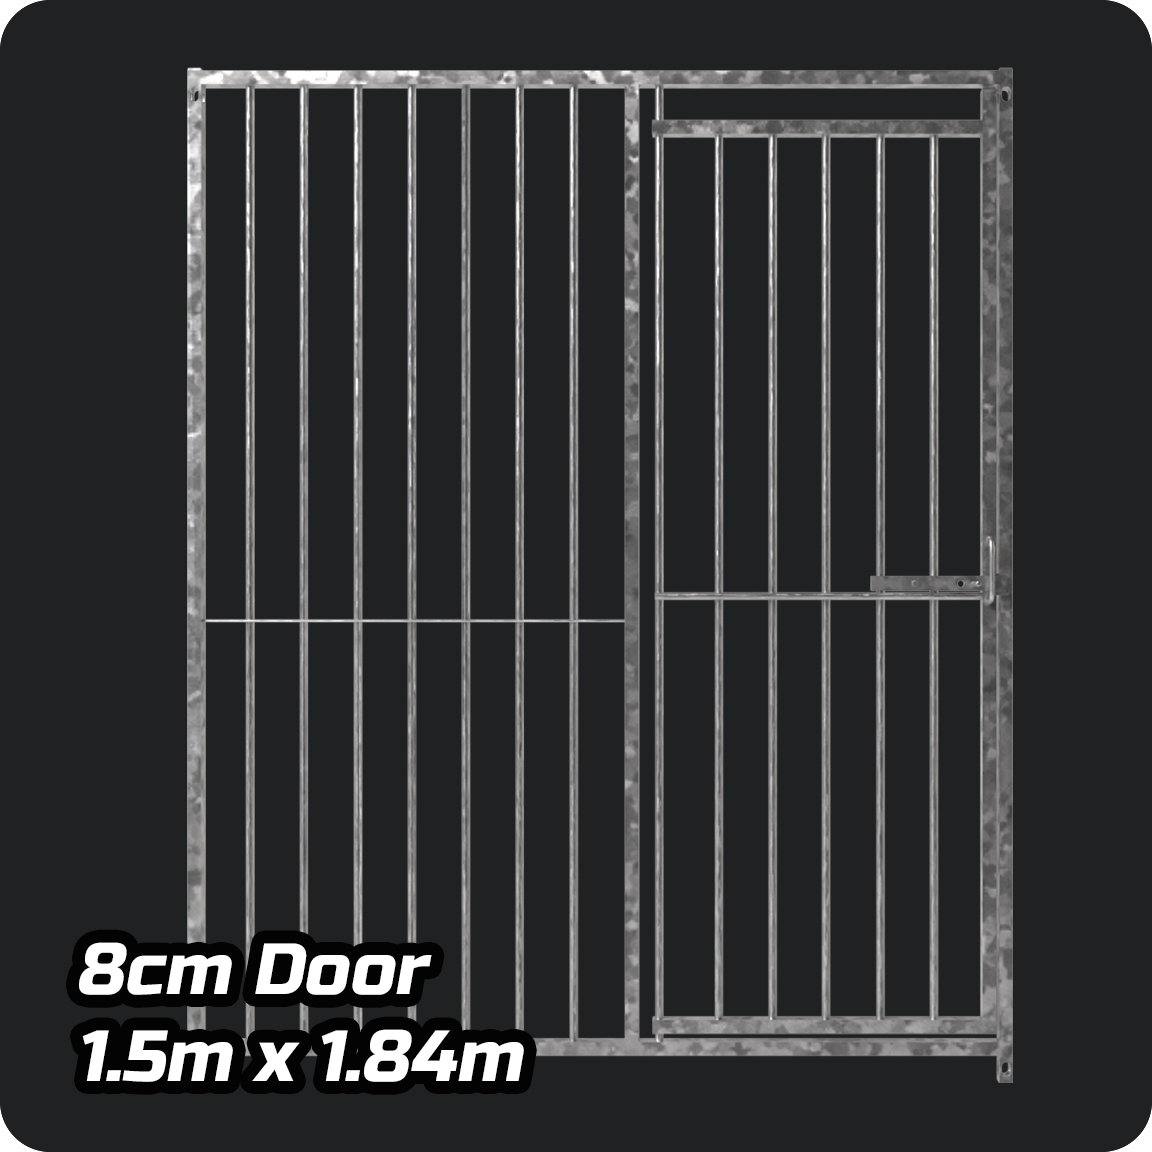 1.5m x 1.84m DOOR - Heavy duty Premium Galvanized - 8cm Gap Panels